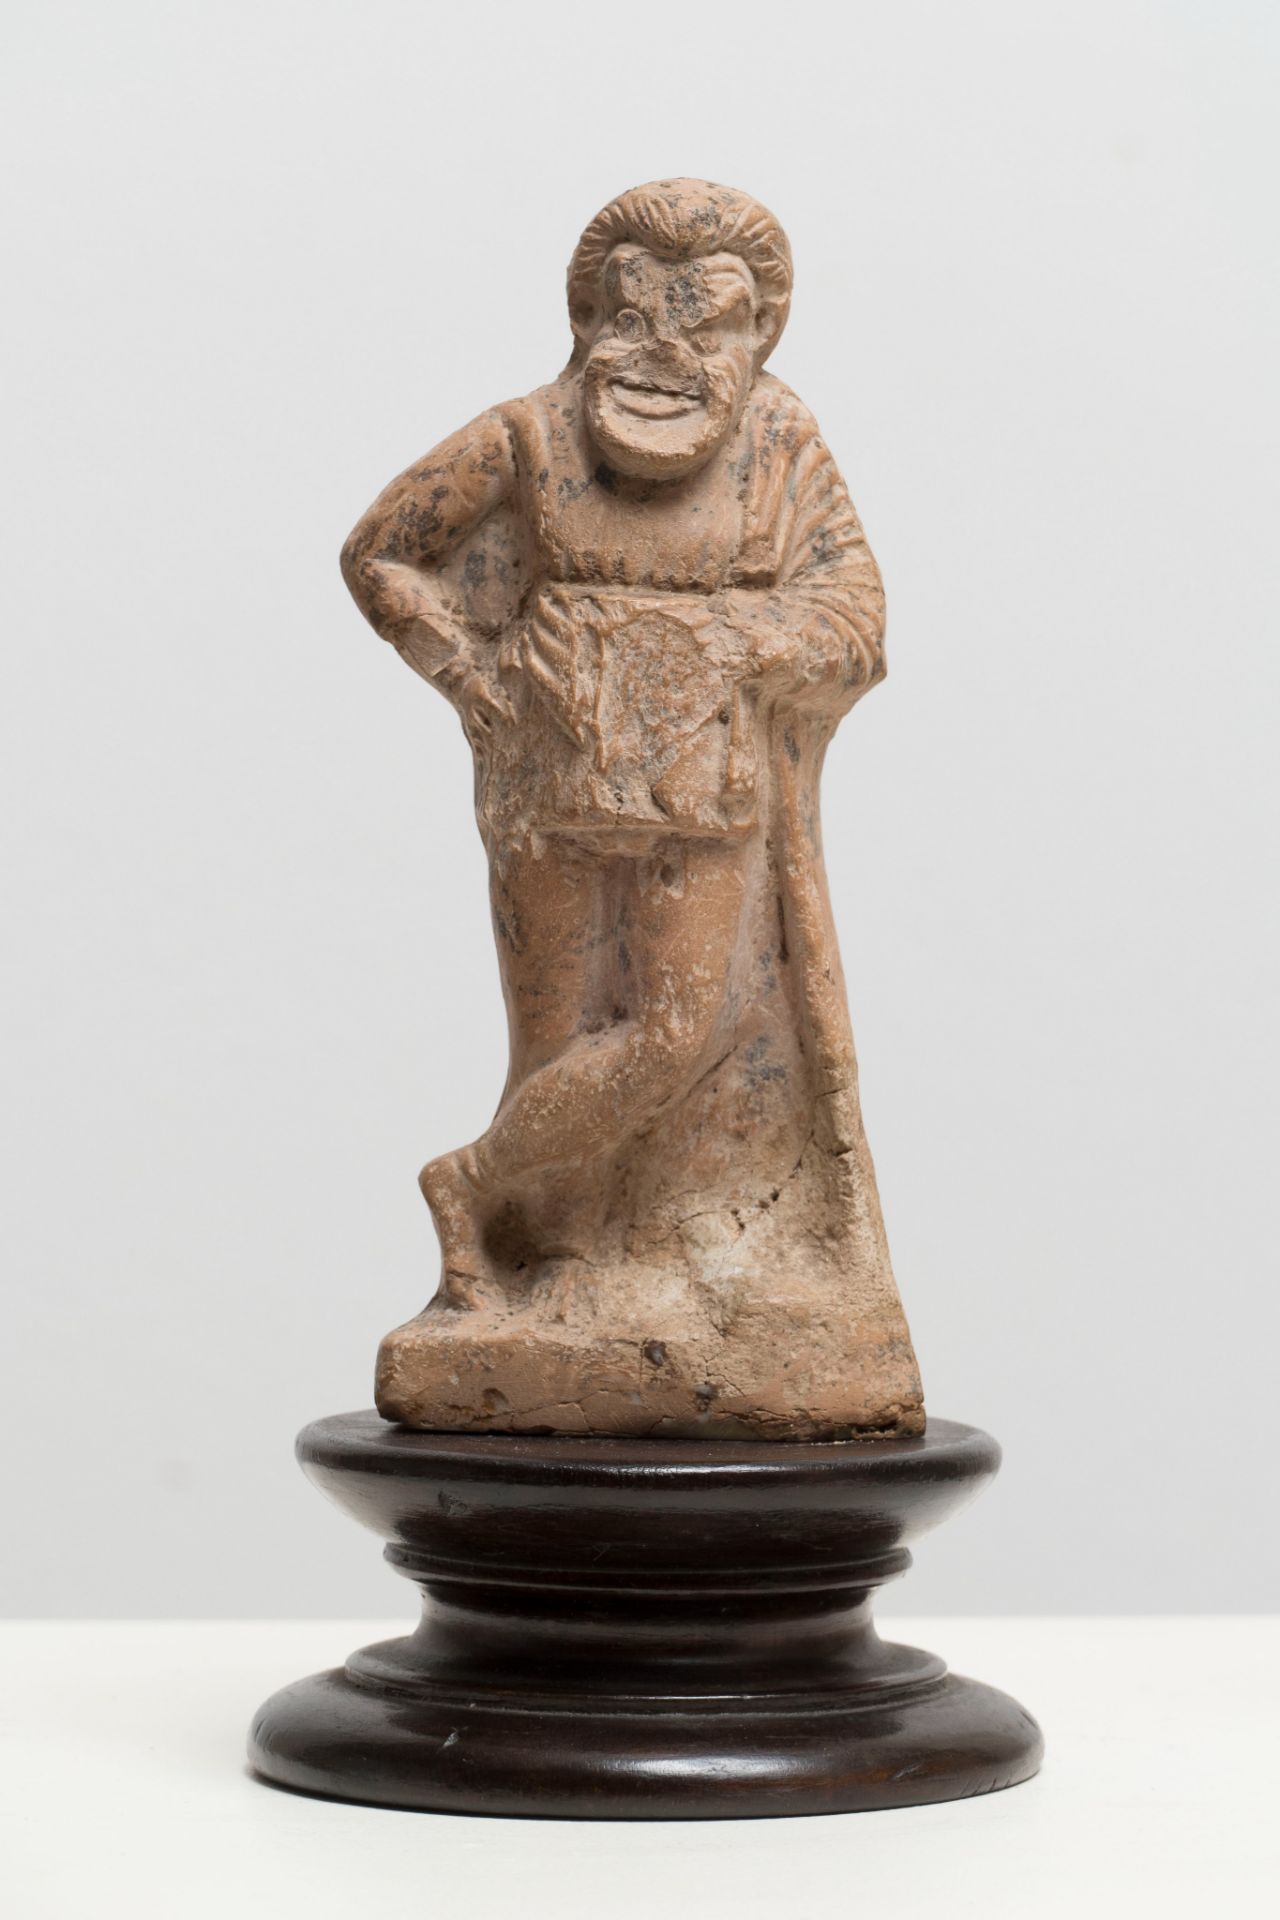 An antique terracotta figurine of a comic actor, Greece, ca. 350 B.C., H 15,2 cm